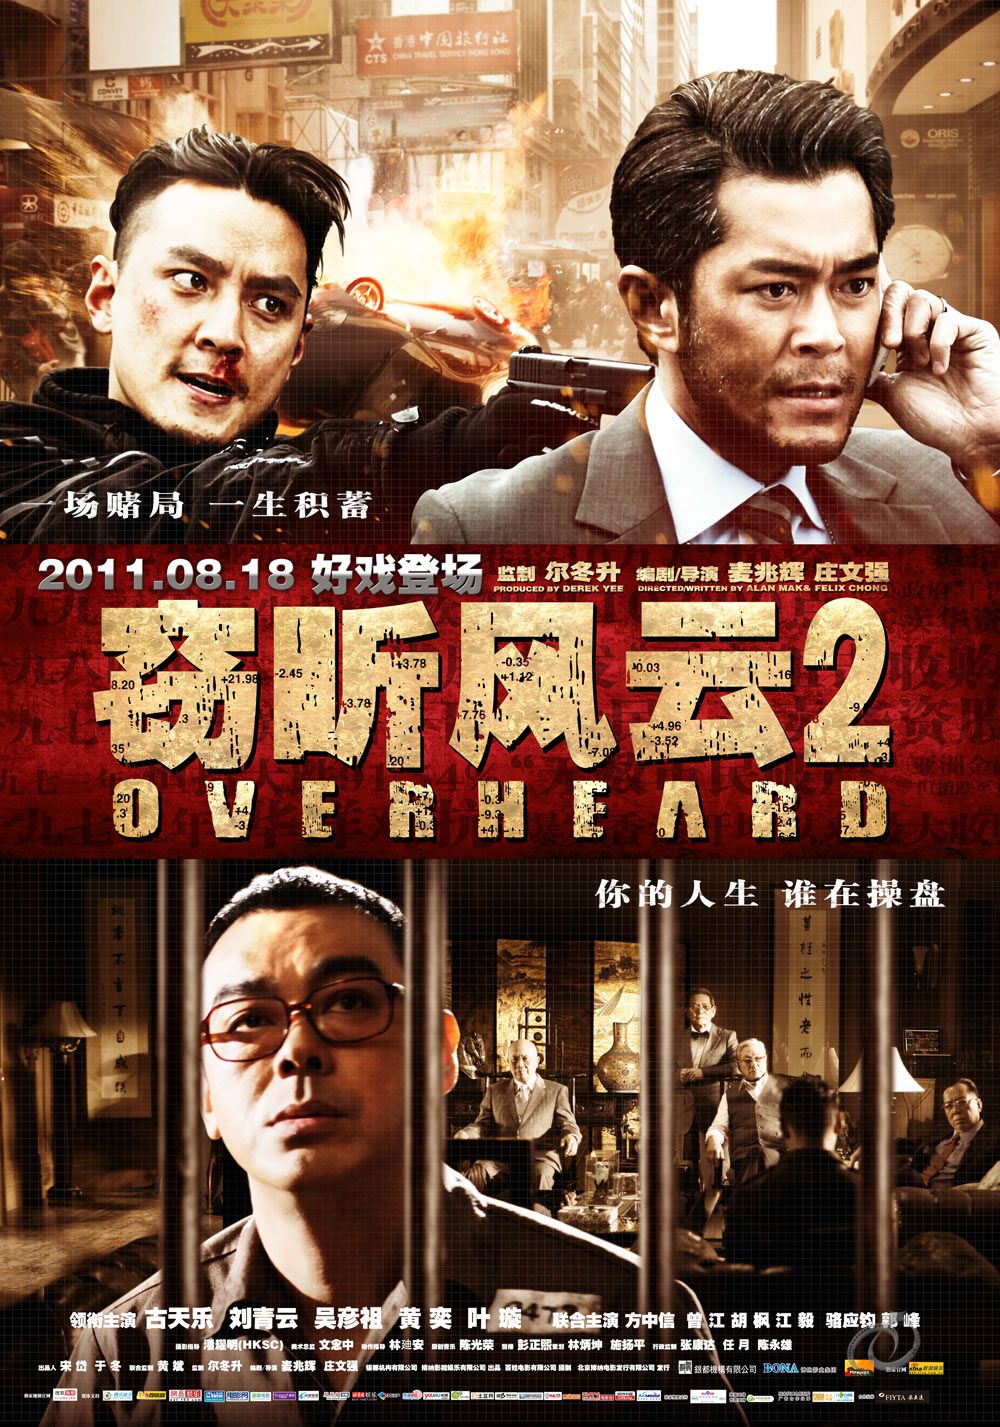 Overheard 2 - Film (2011) streaming VF gratuit complet